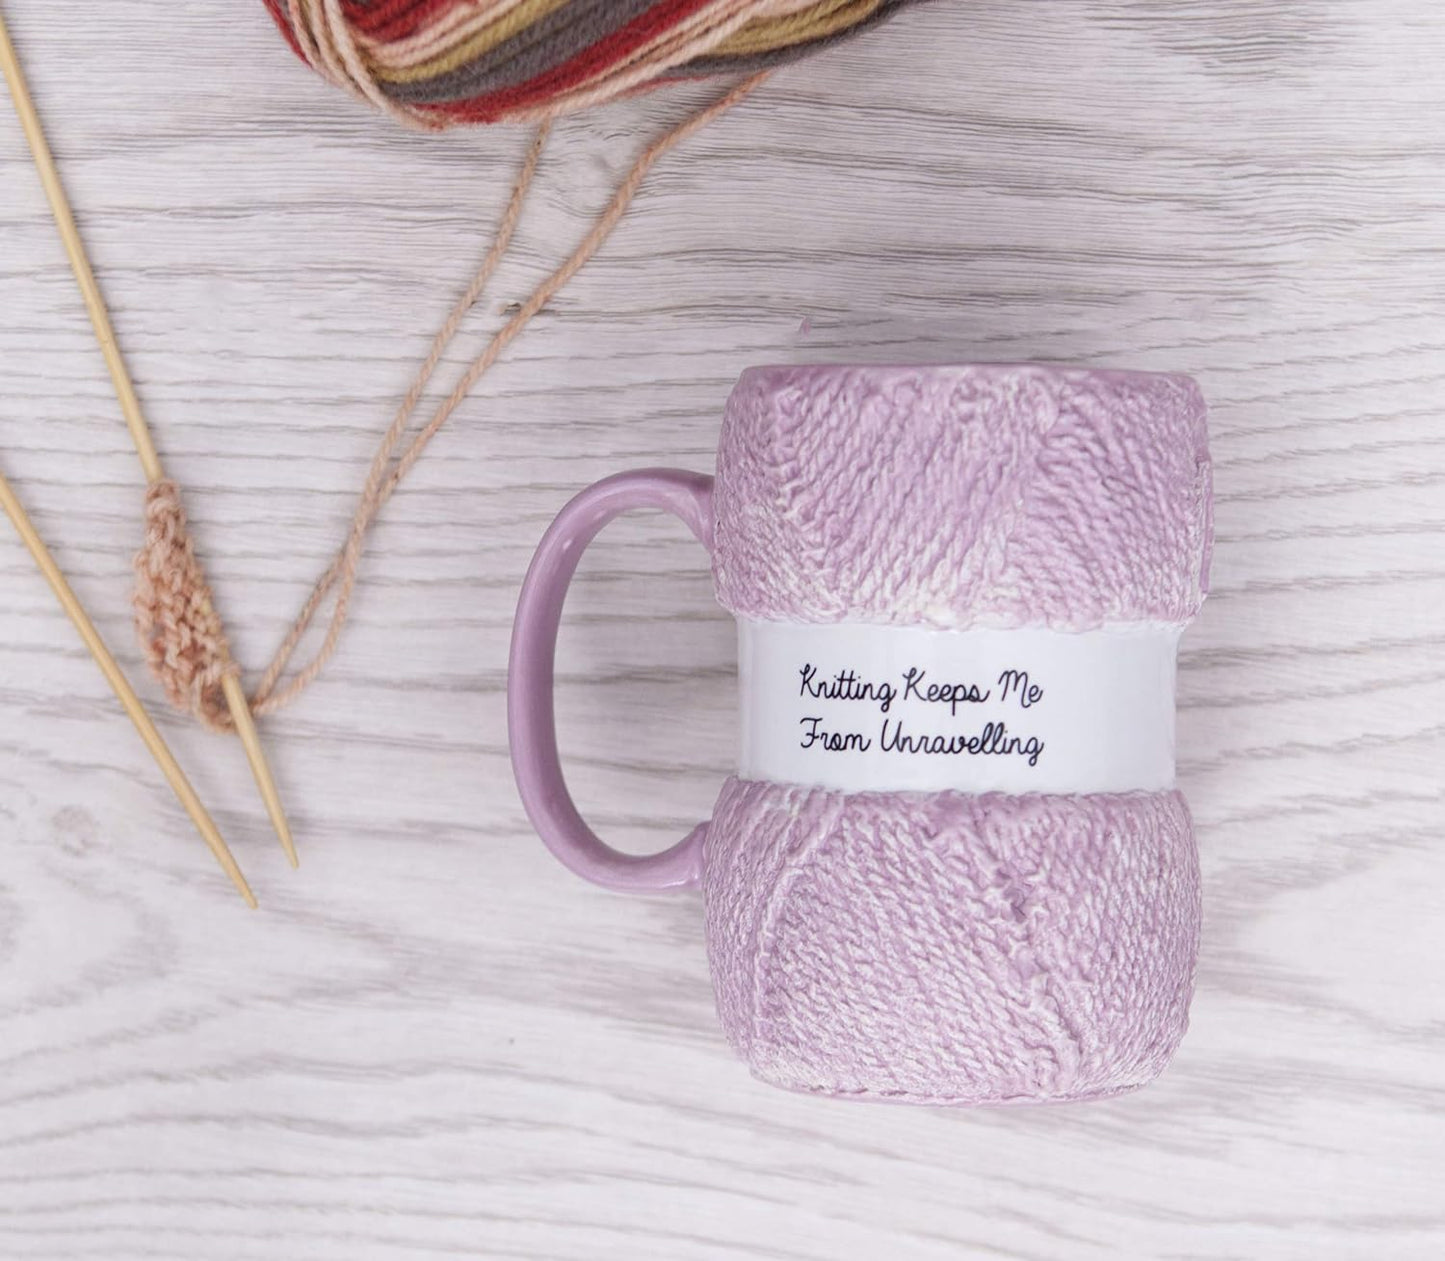 450ML Colorful Wool Ceramics Mugs with Handle Coffee Milk Tea Cups Home Office Drinkware Porcelain Mug Breakfast Cup Girls Gifts acacuss